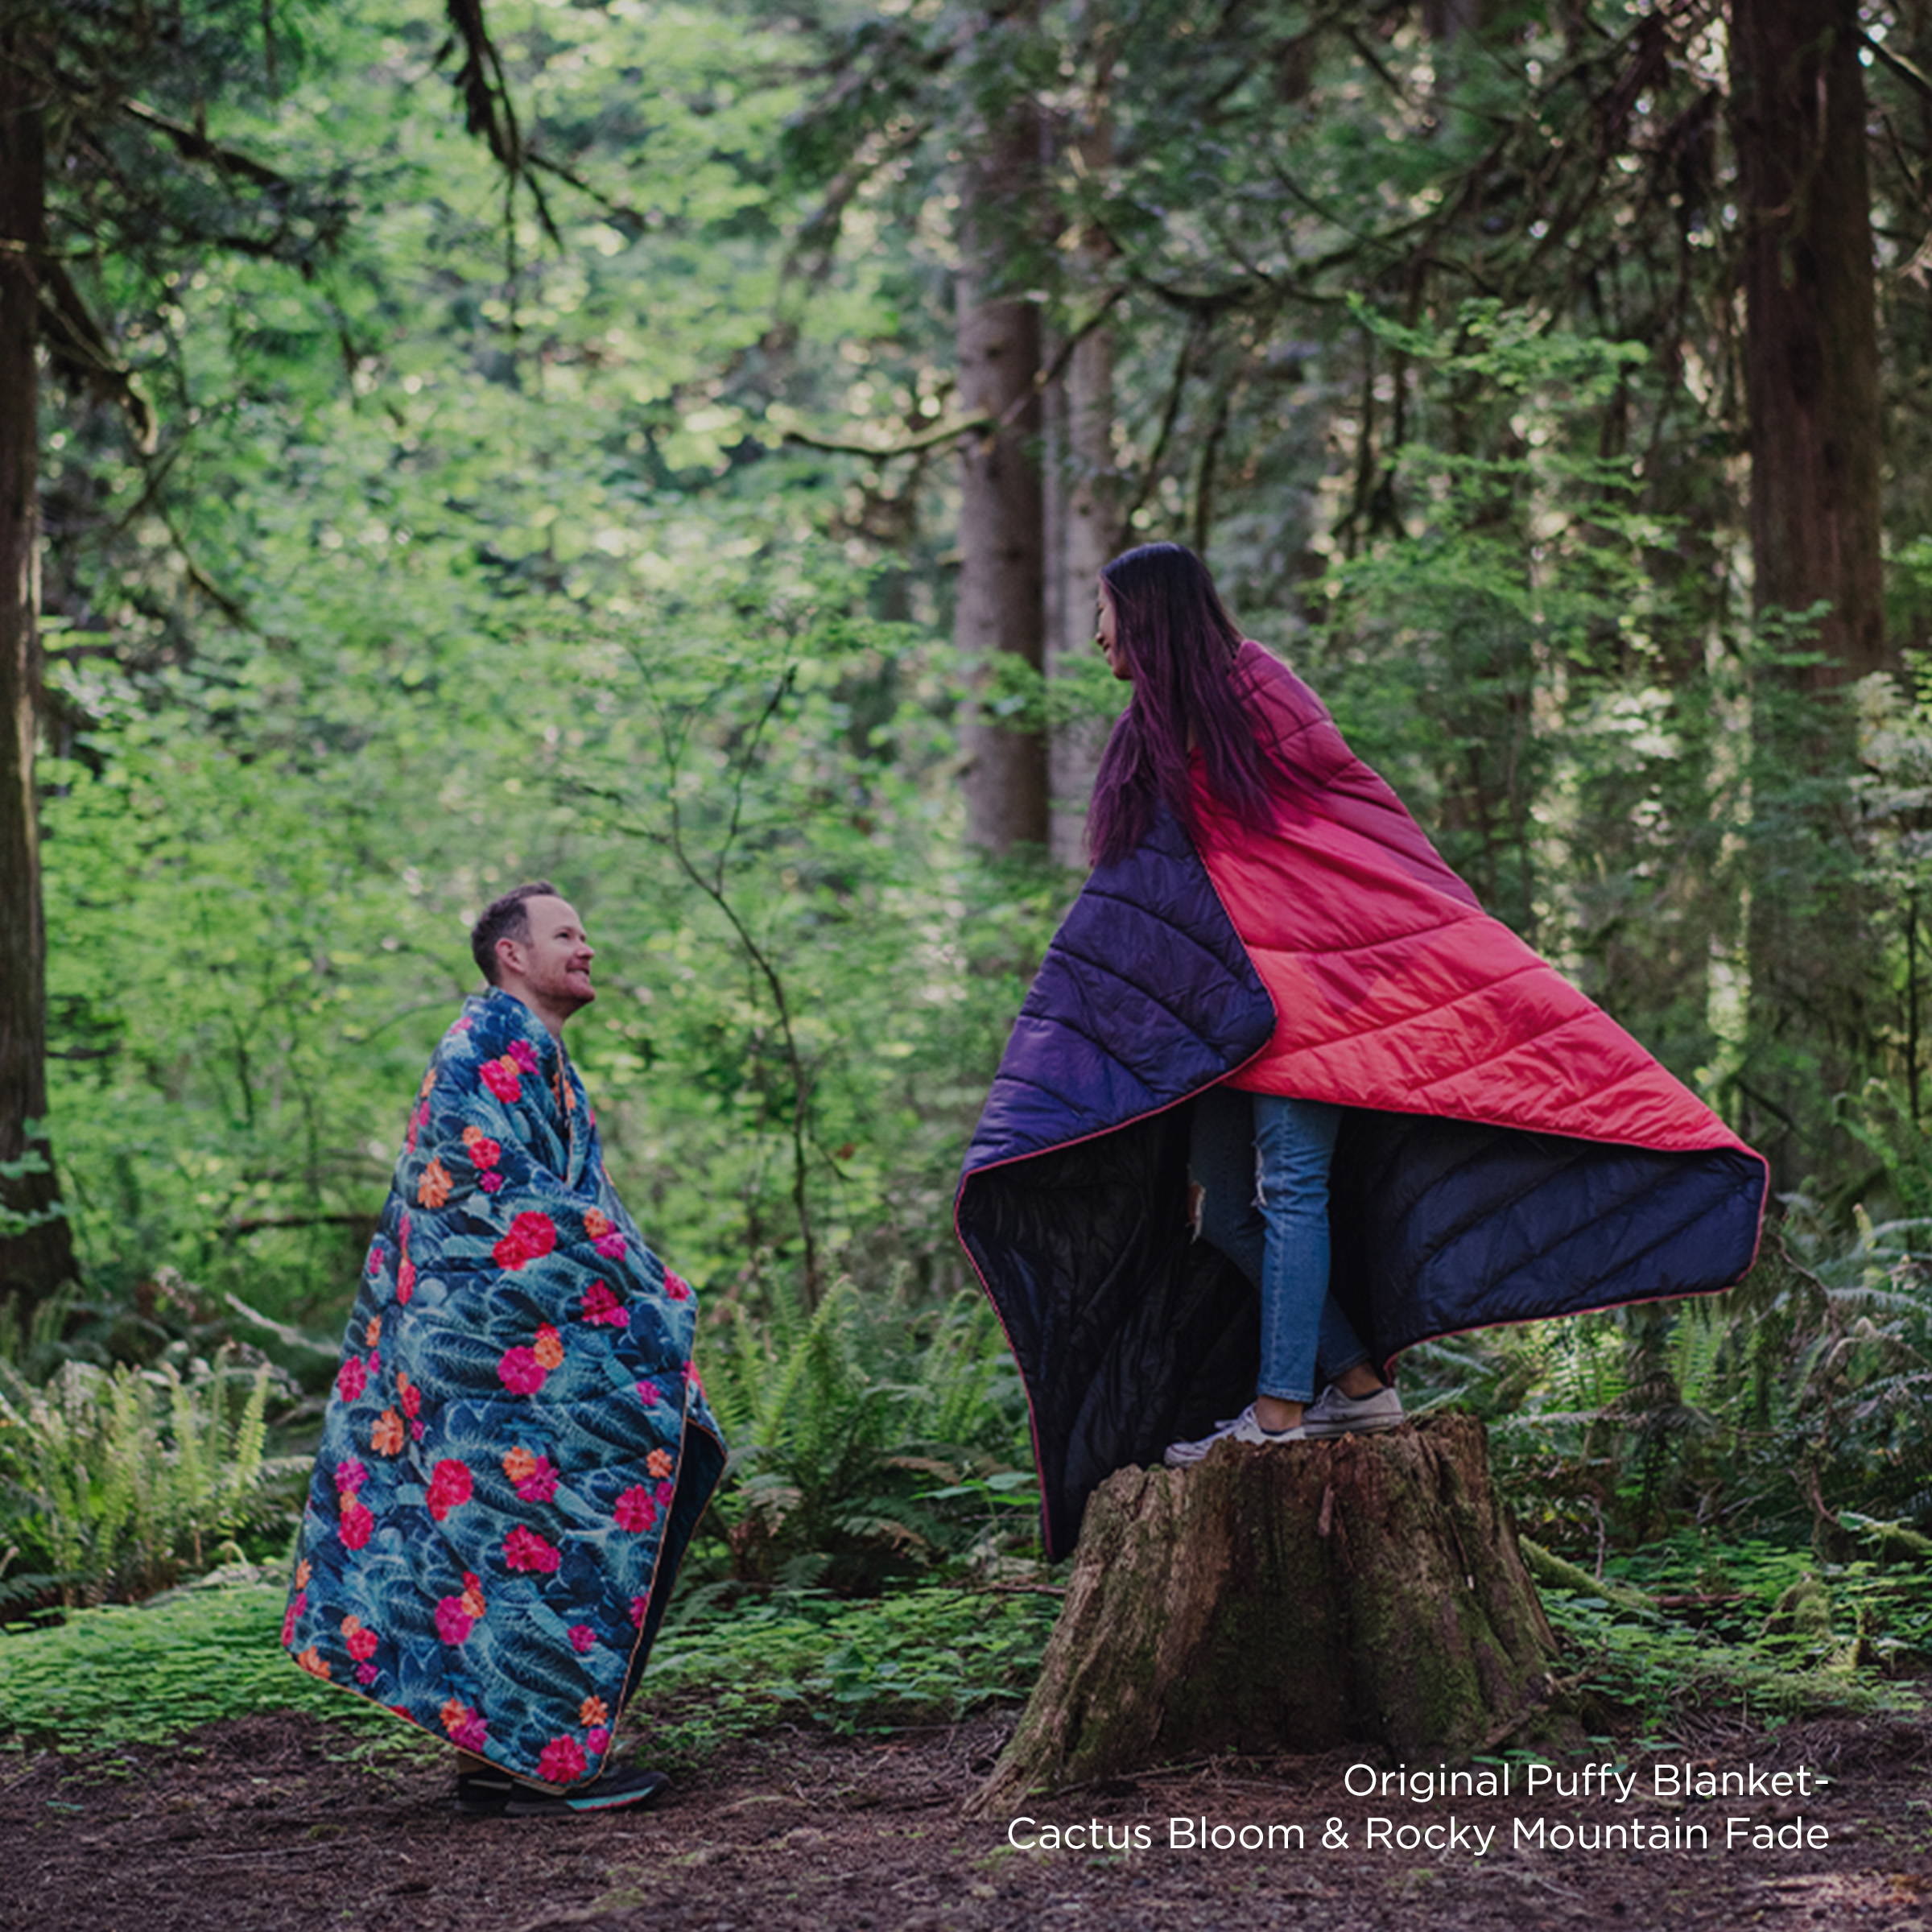 Two people wearing Rumpl blankets in nature